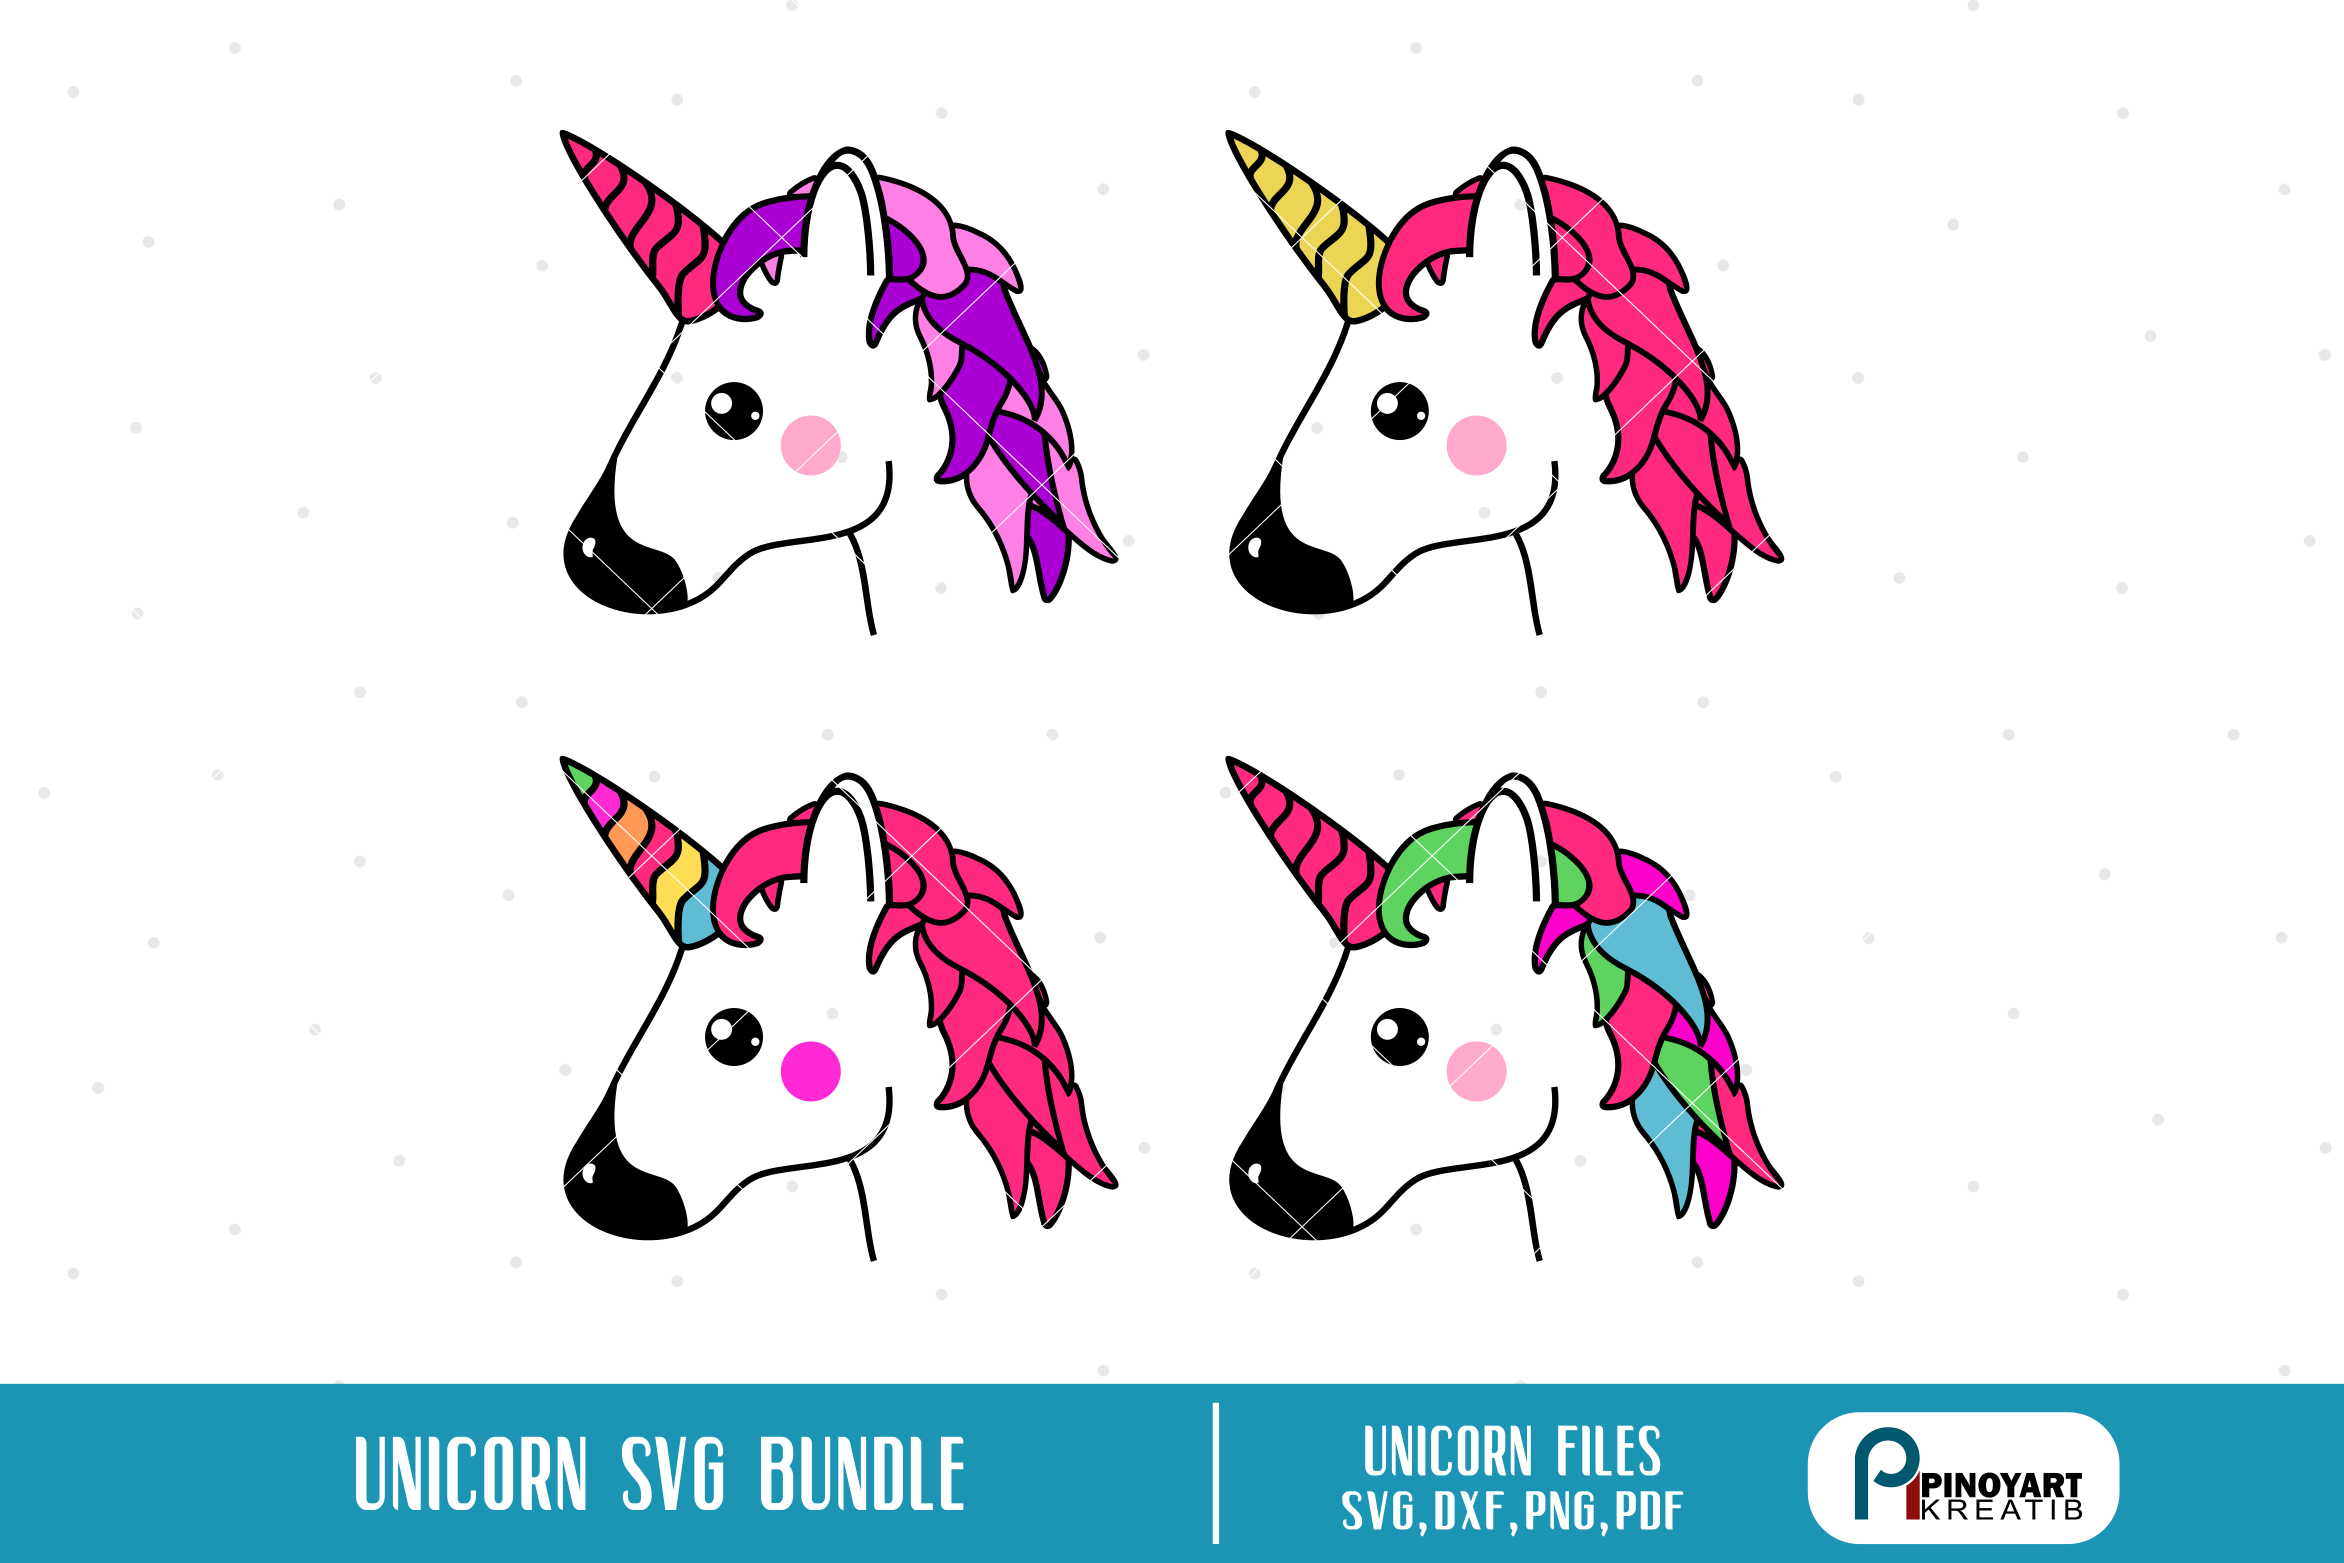 Download unicorn svg,unicorn svg file,unicorn dxf,unicorn dxf file ...